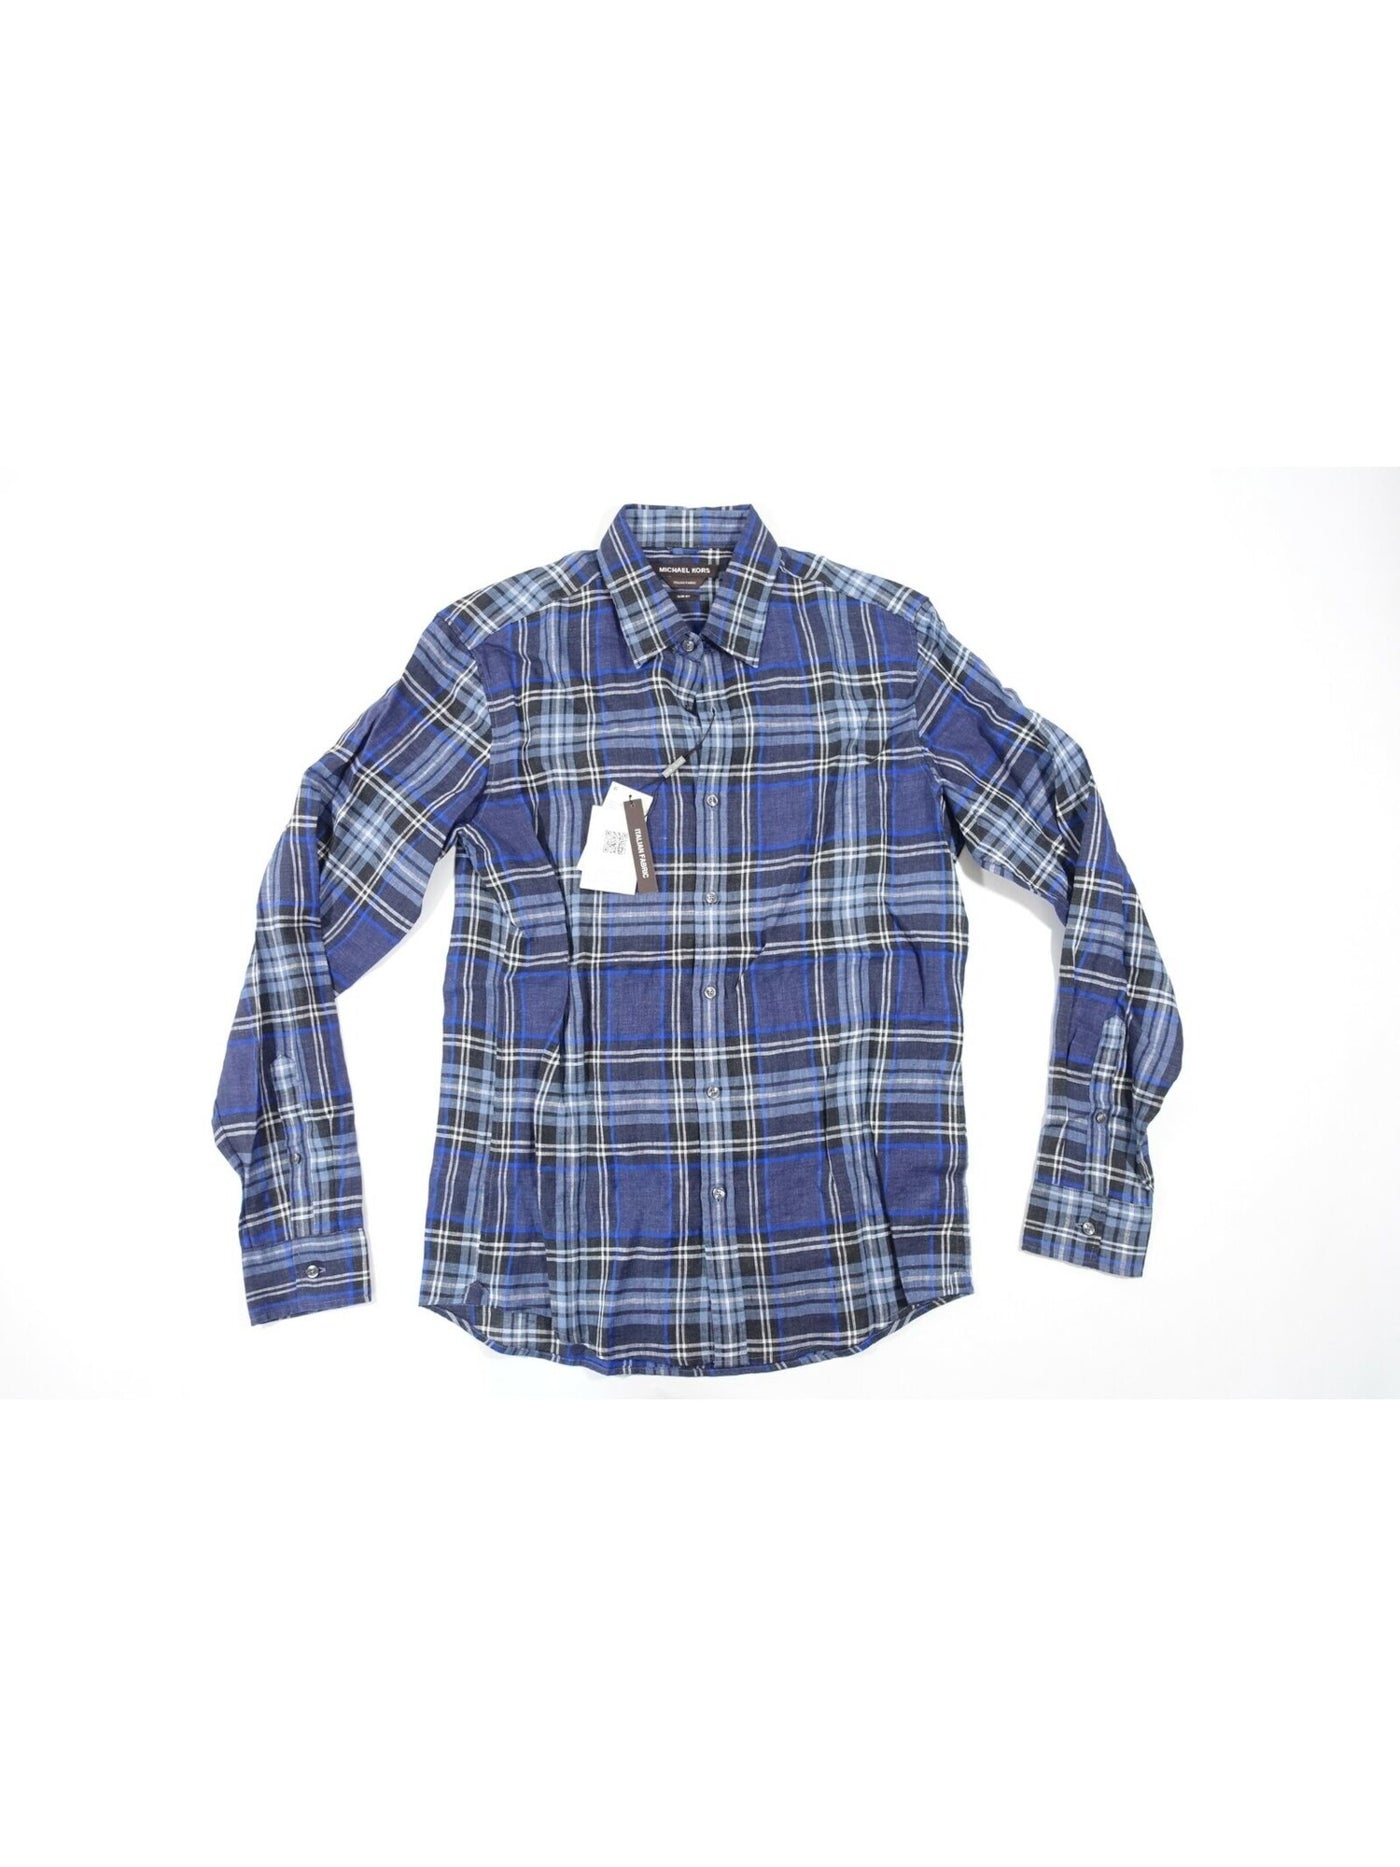 MICHAEL KORS Mens Blue Plaid Long Sleeve Collared Slim Fit Button Down Shirt XXL